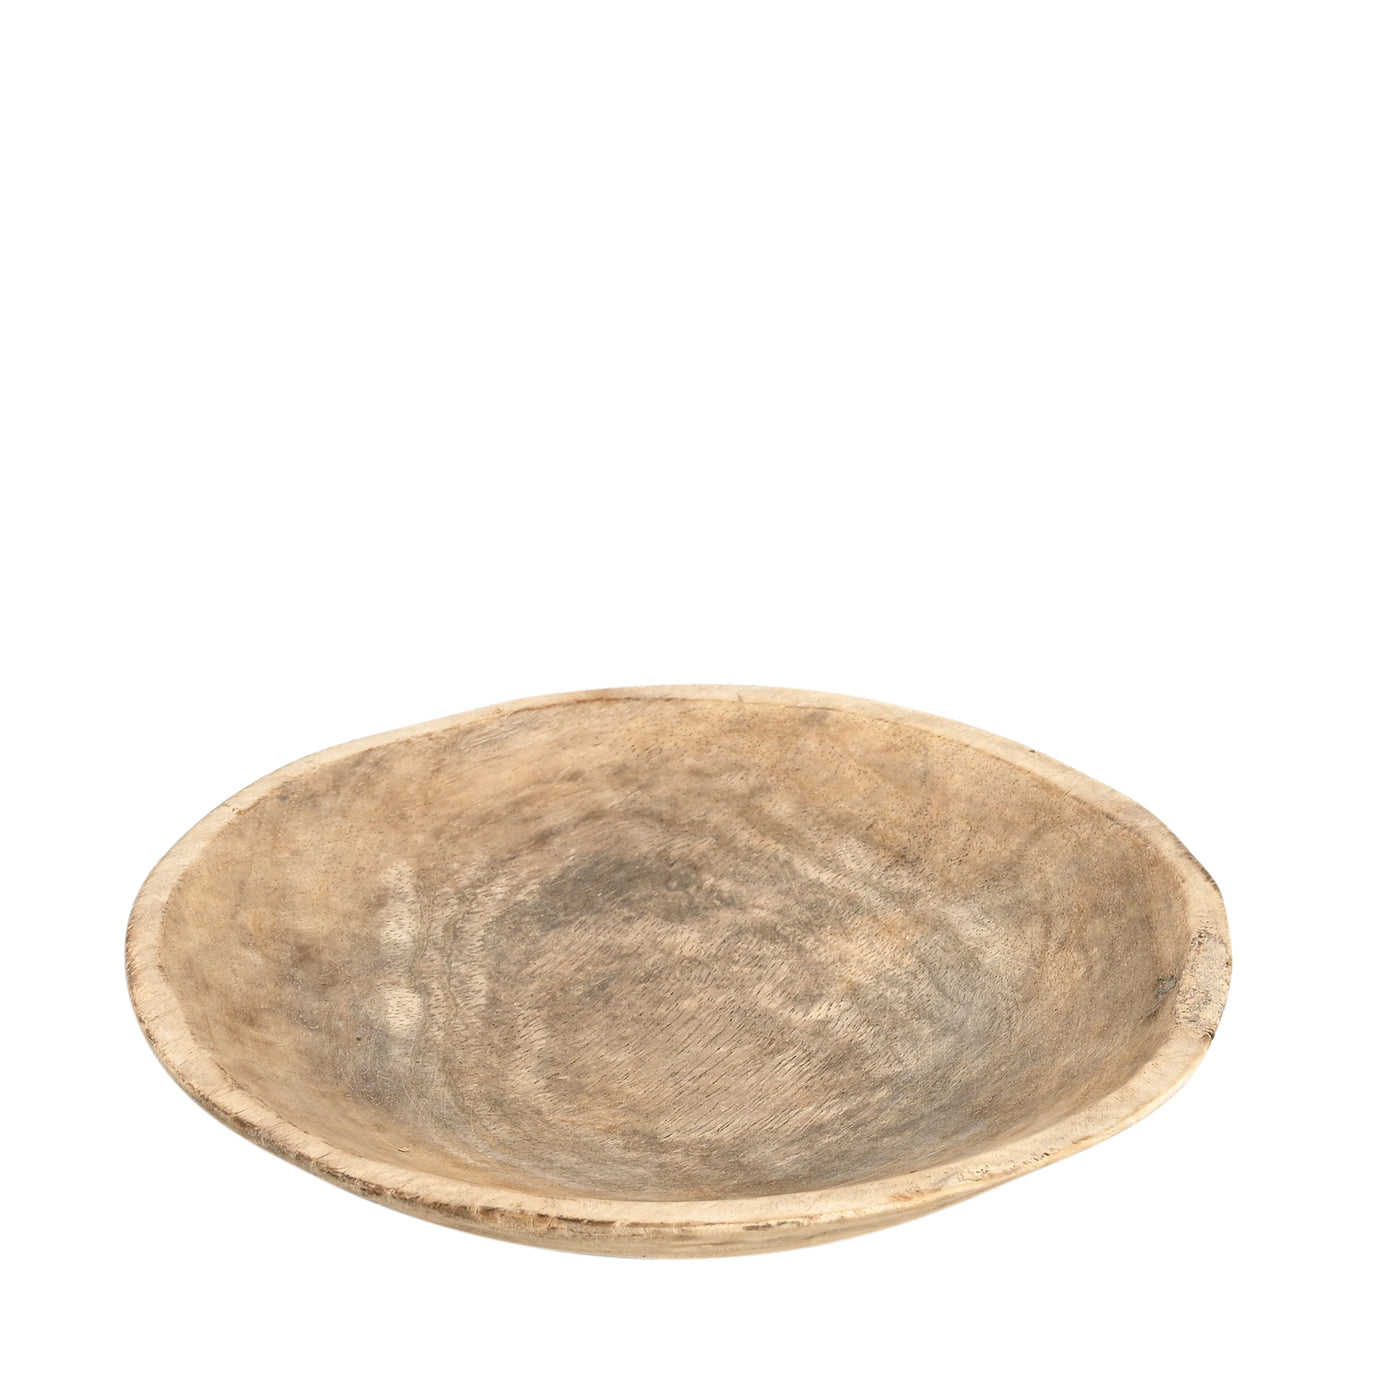 Katora - Wooden plate n ° 21